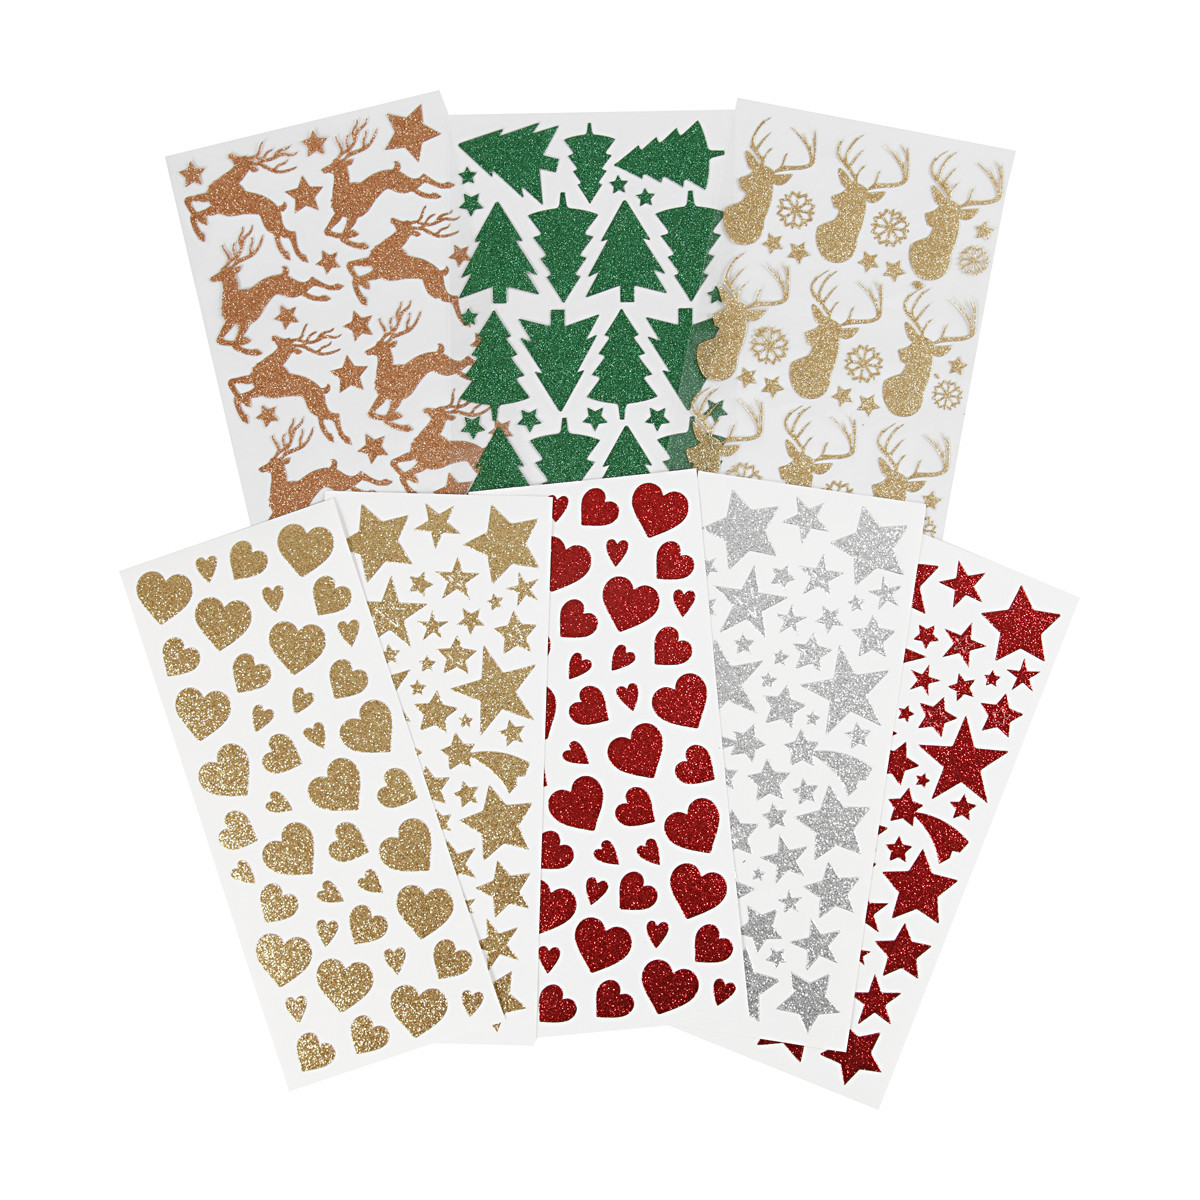 Stickers, Christmas stickers, 15x16,5 cm, 1 sheet